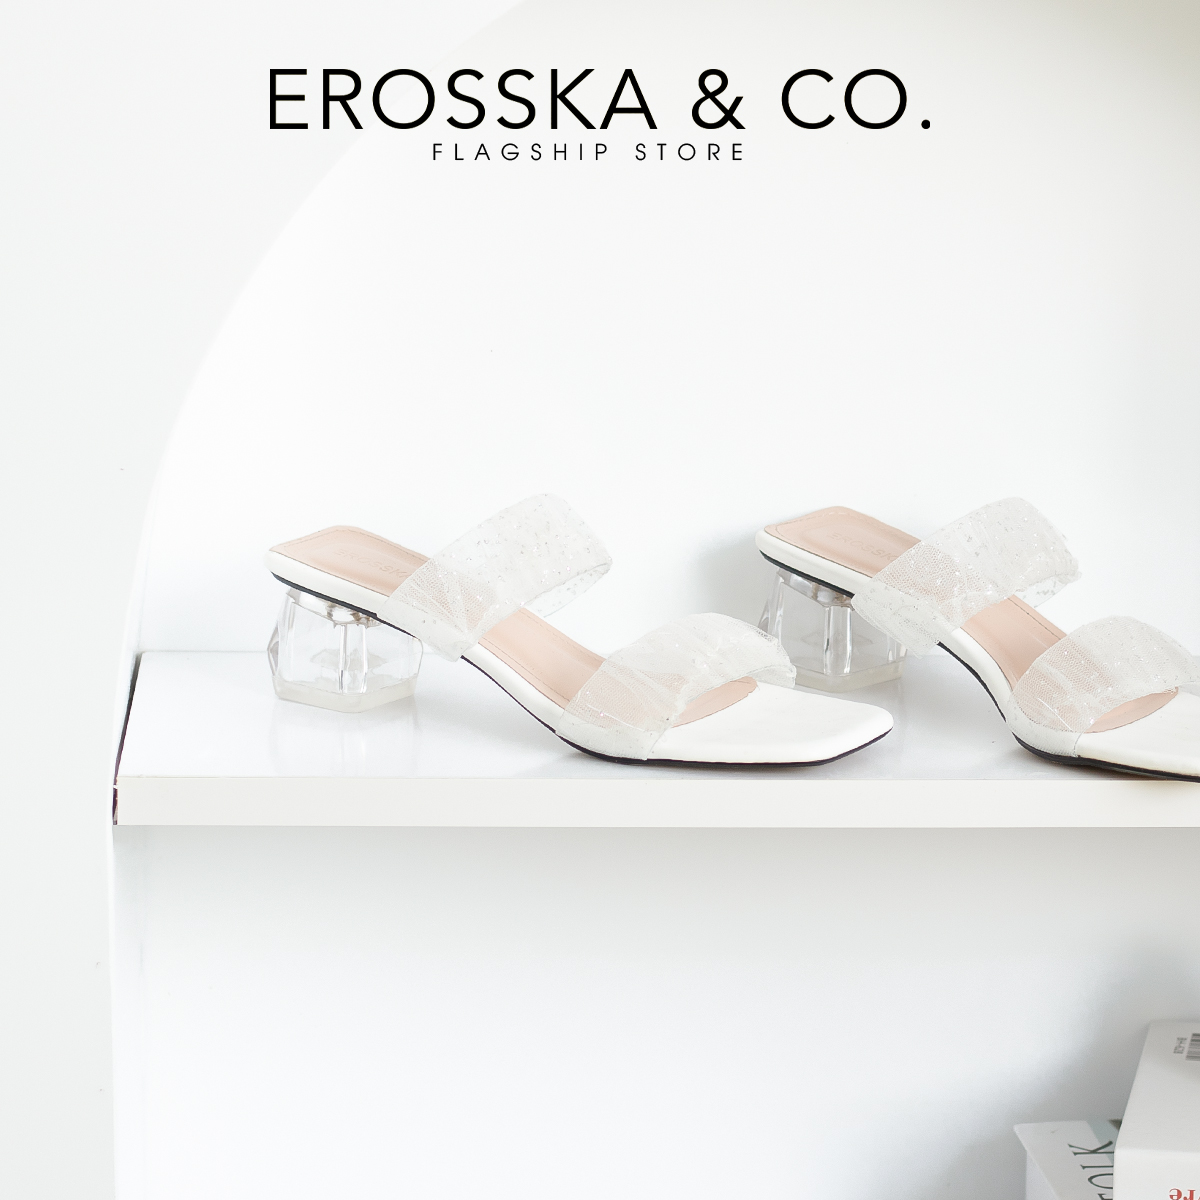 Erosska - Dép cao gót nữ 2 quai trong sang trọng - EM097